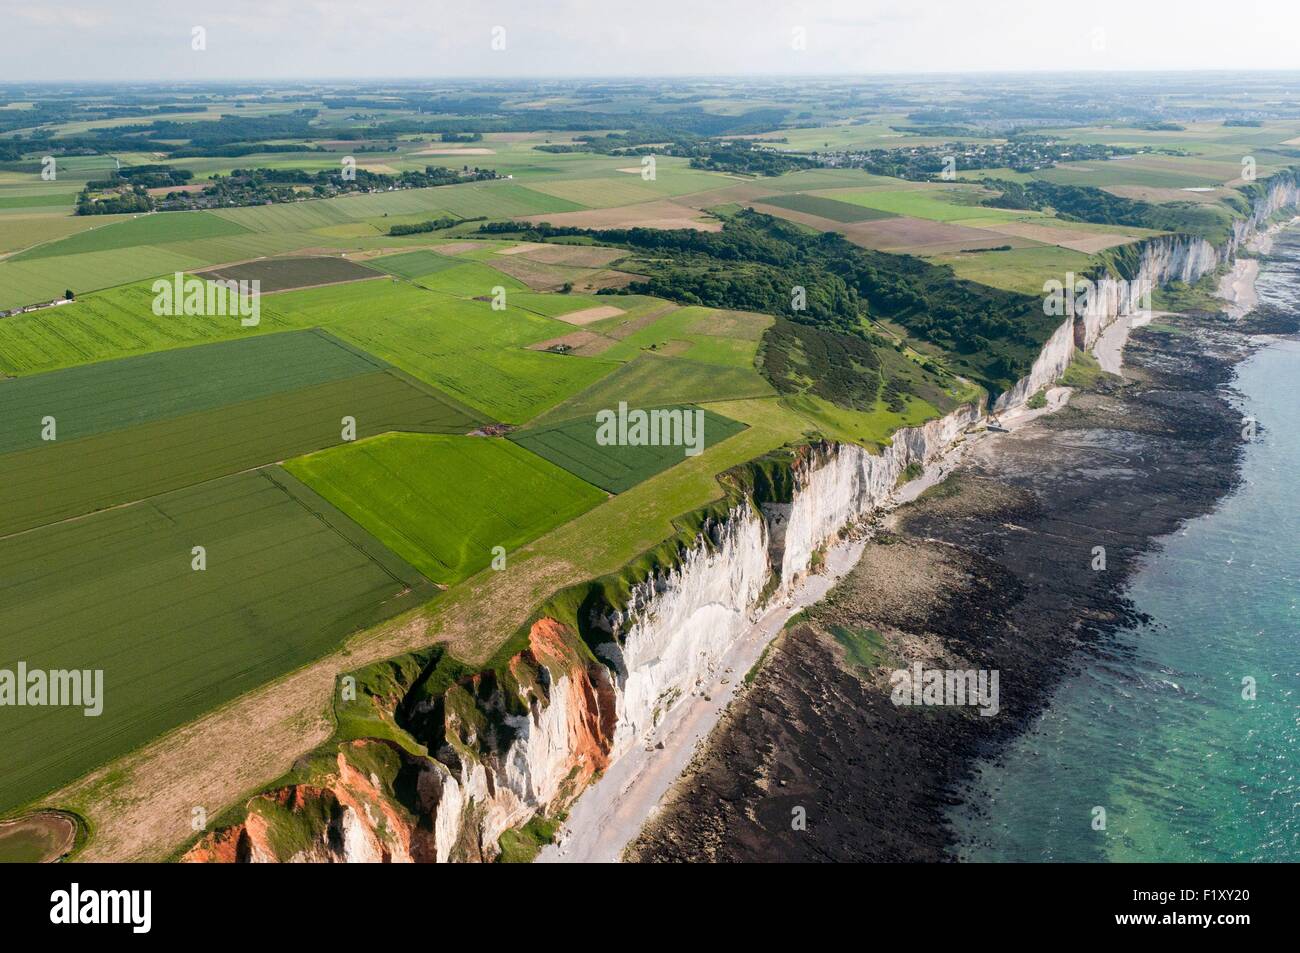 France, Seine Maritime, Pays de Caux, Cote d'Albatre, coast between Fecamp and Etretat, Valleuse, cliffs, rocky reef (aerial view) Stock Photo